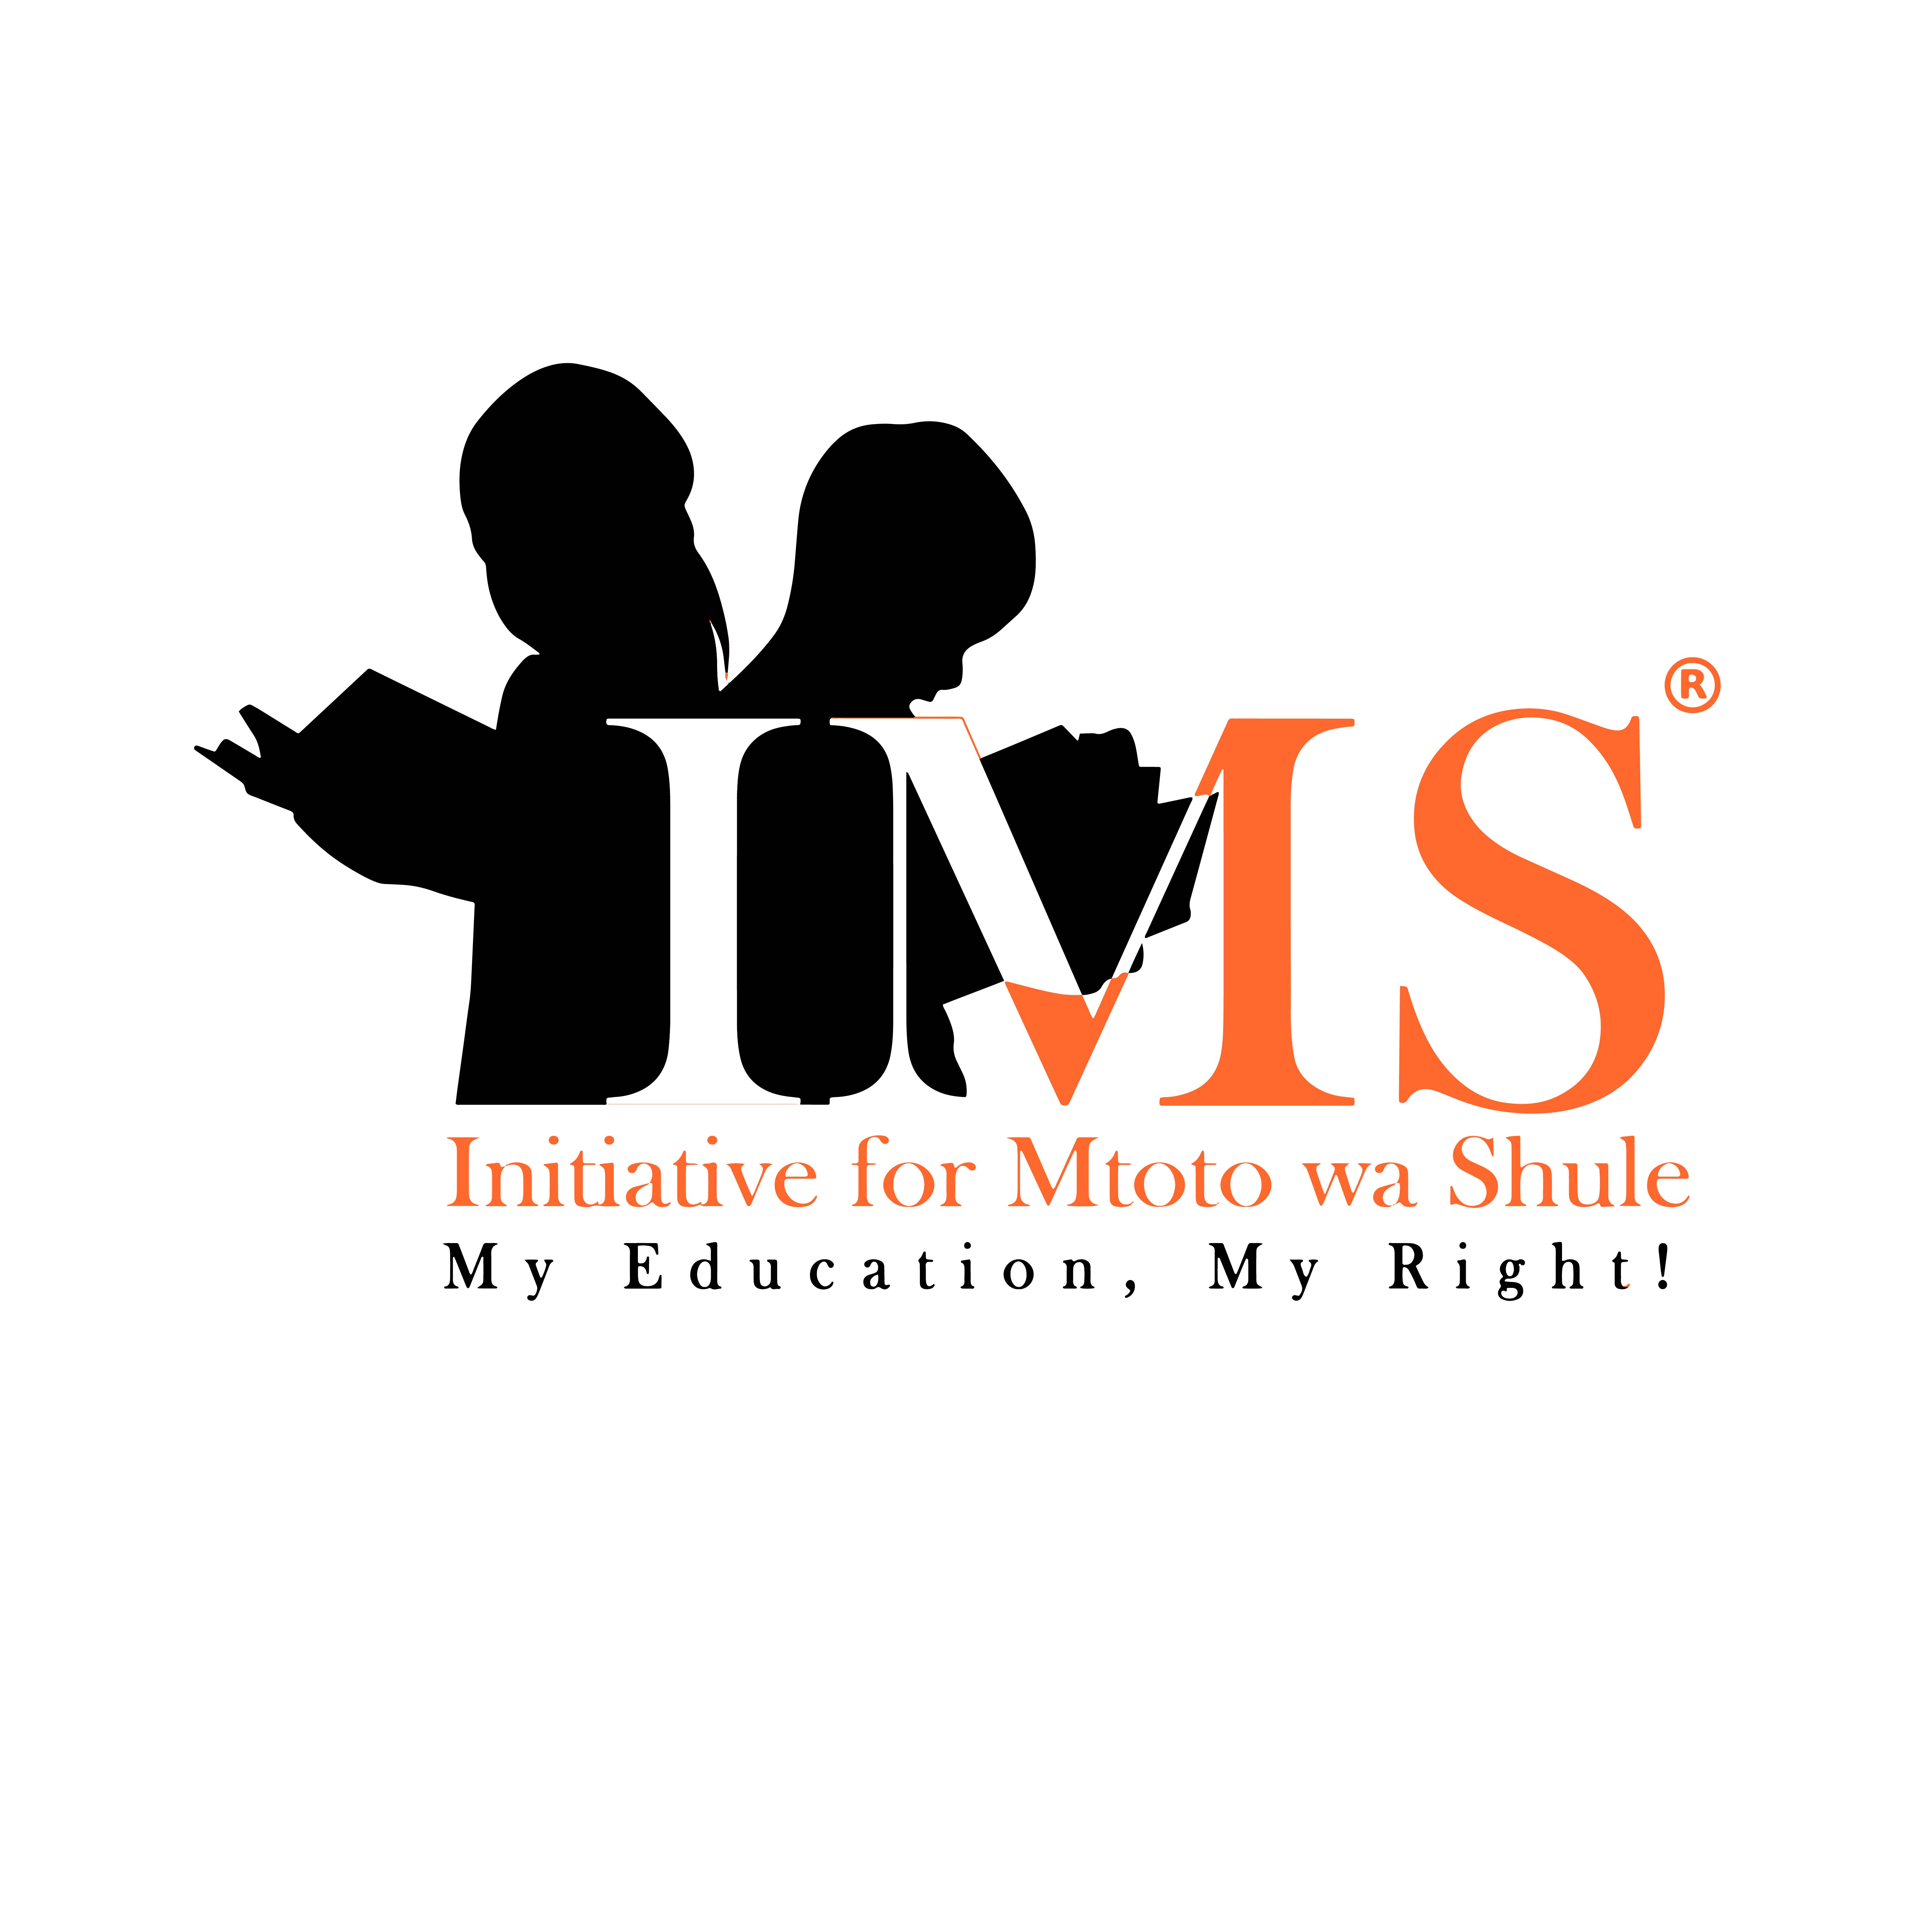 Initiative for Mtoto wa Shule (IMS)